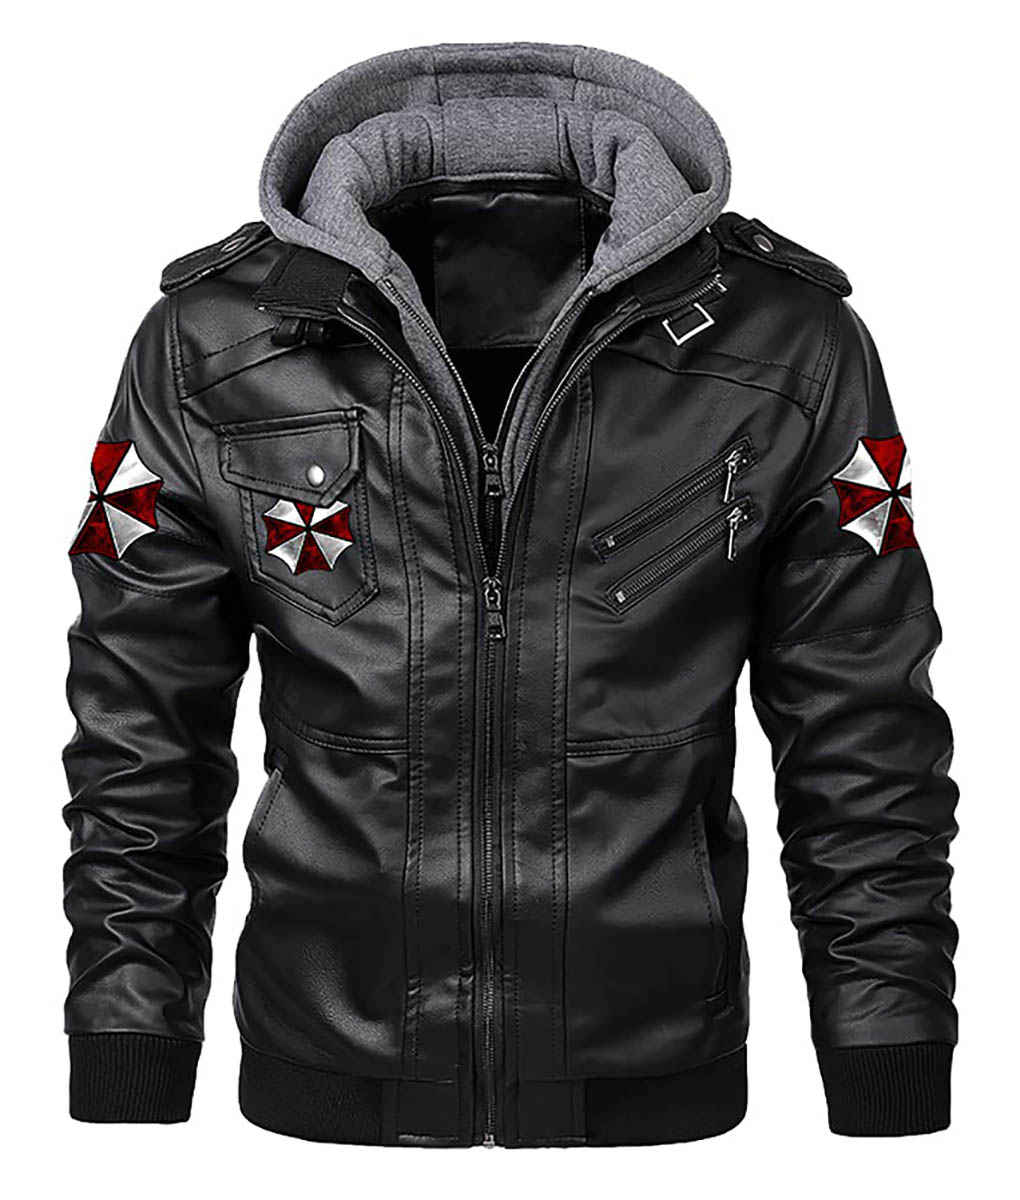 Black Leather Cosplay Biker Jacket (1)